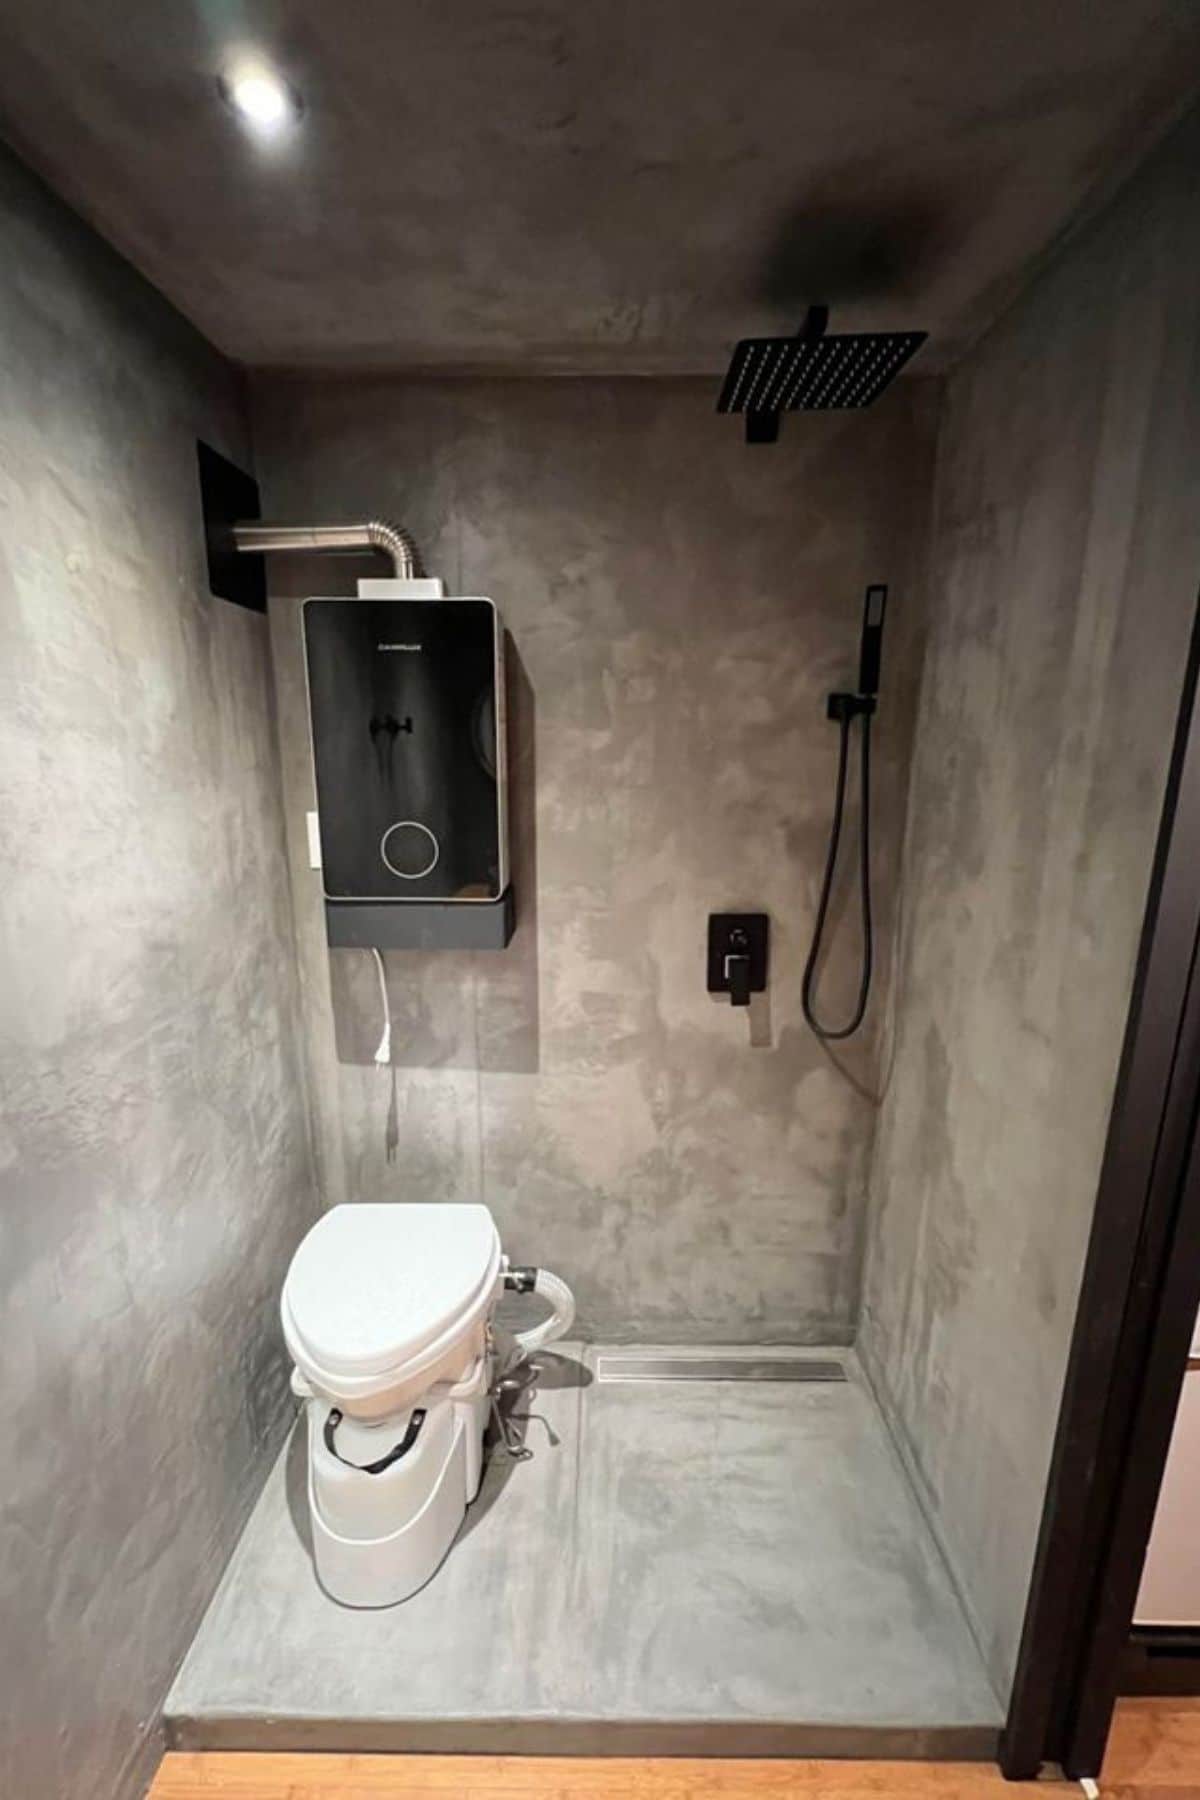 toilet inside concrete basin with shower head on far left corner